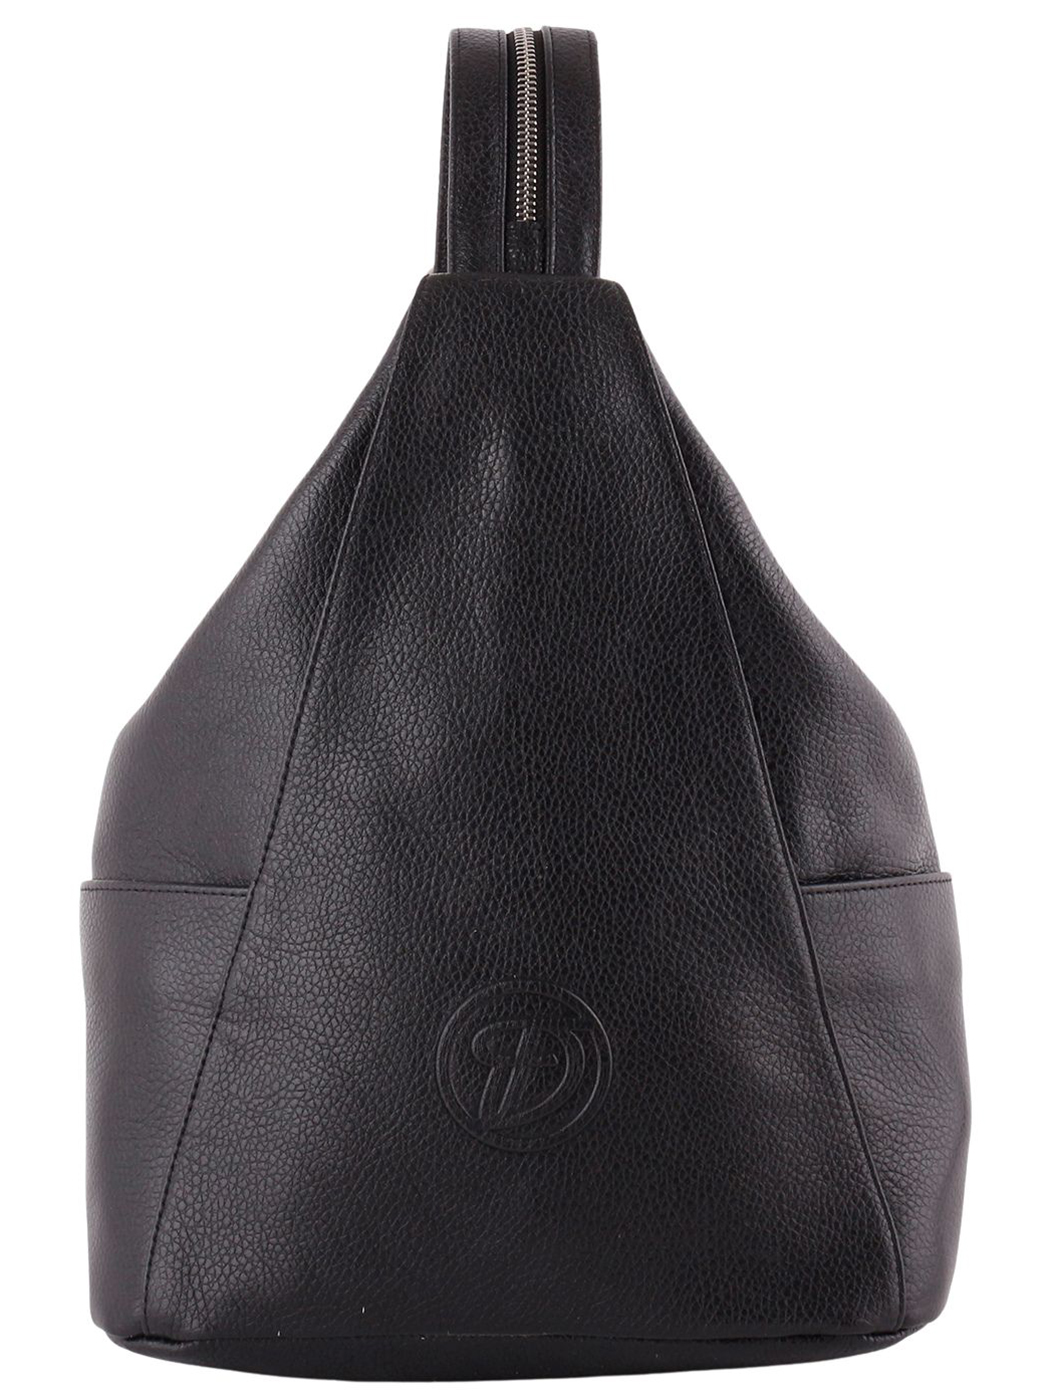 Рюкзак женский Fiato Dream 11270 черный, 34х26х17 см